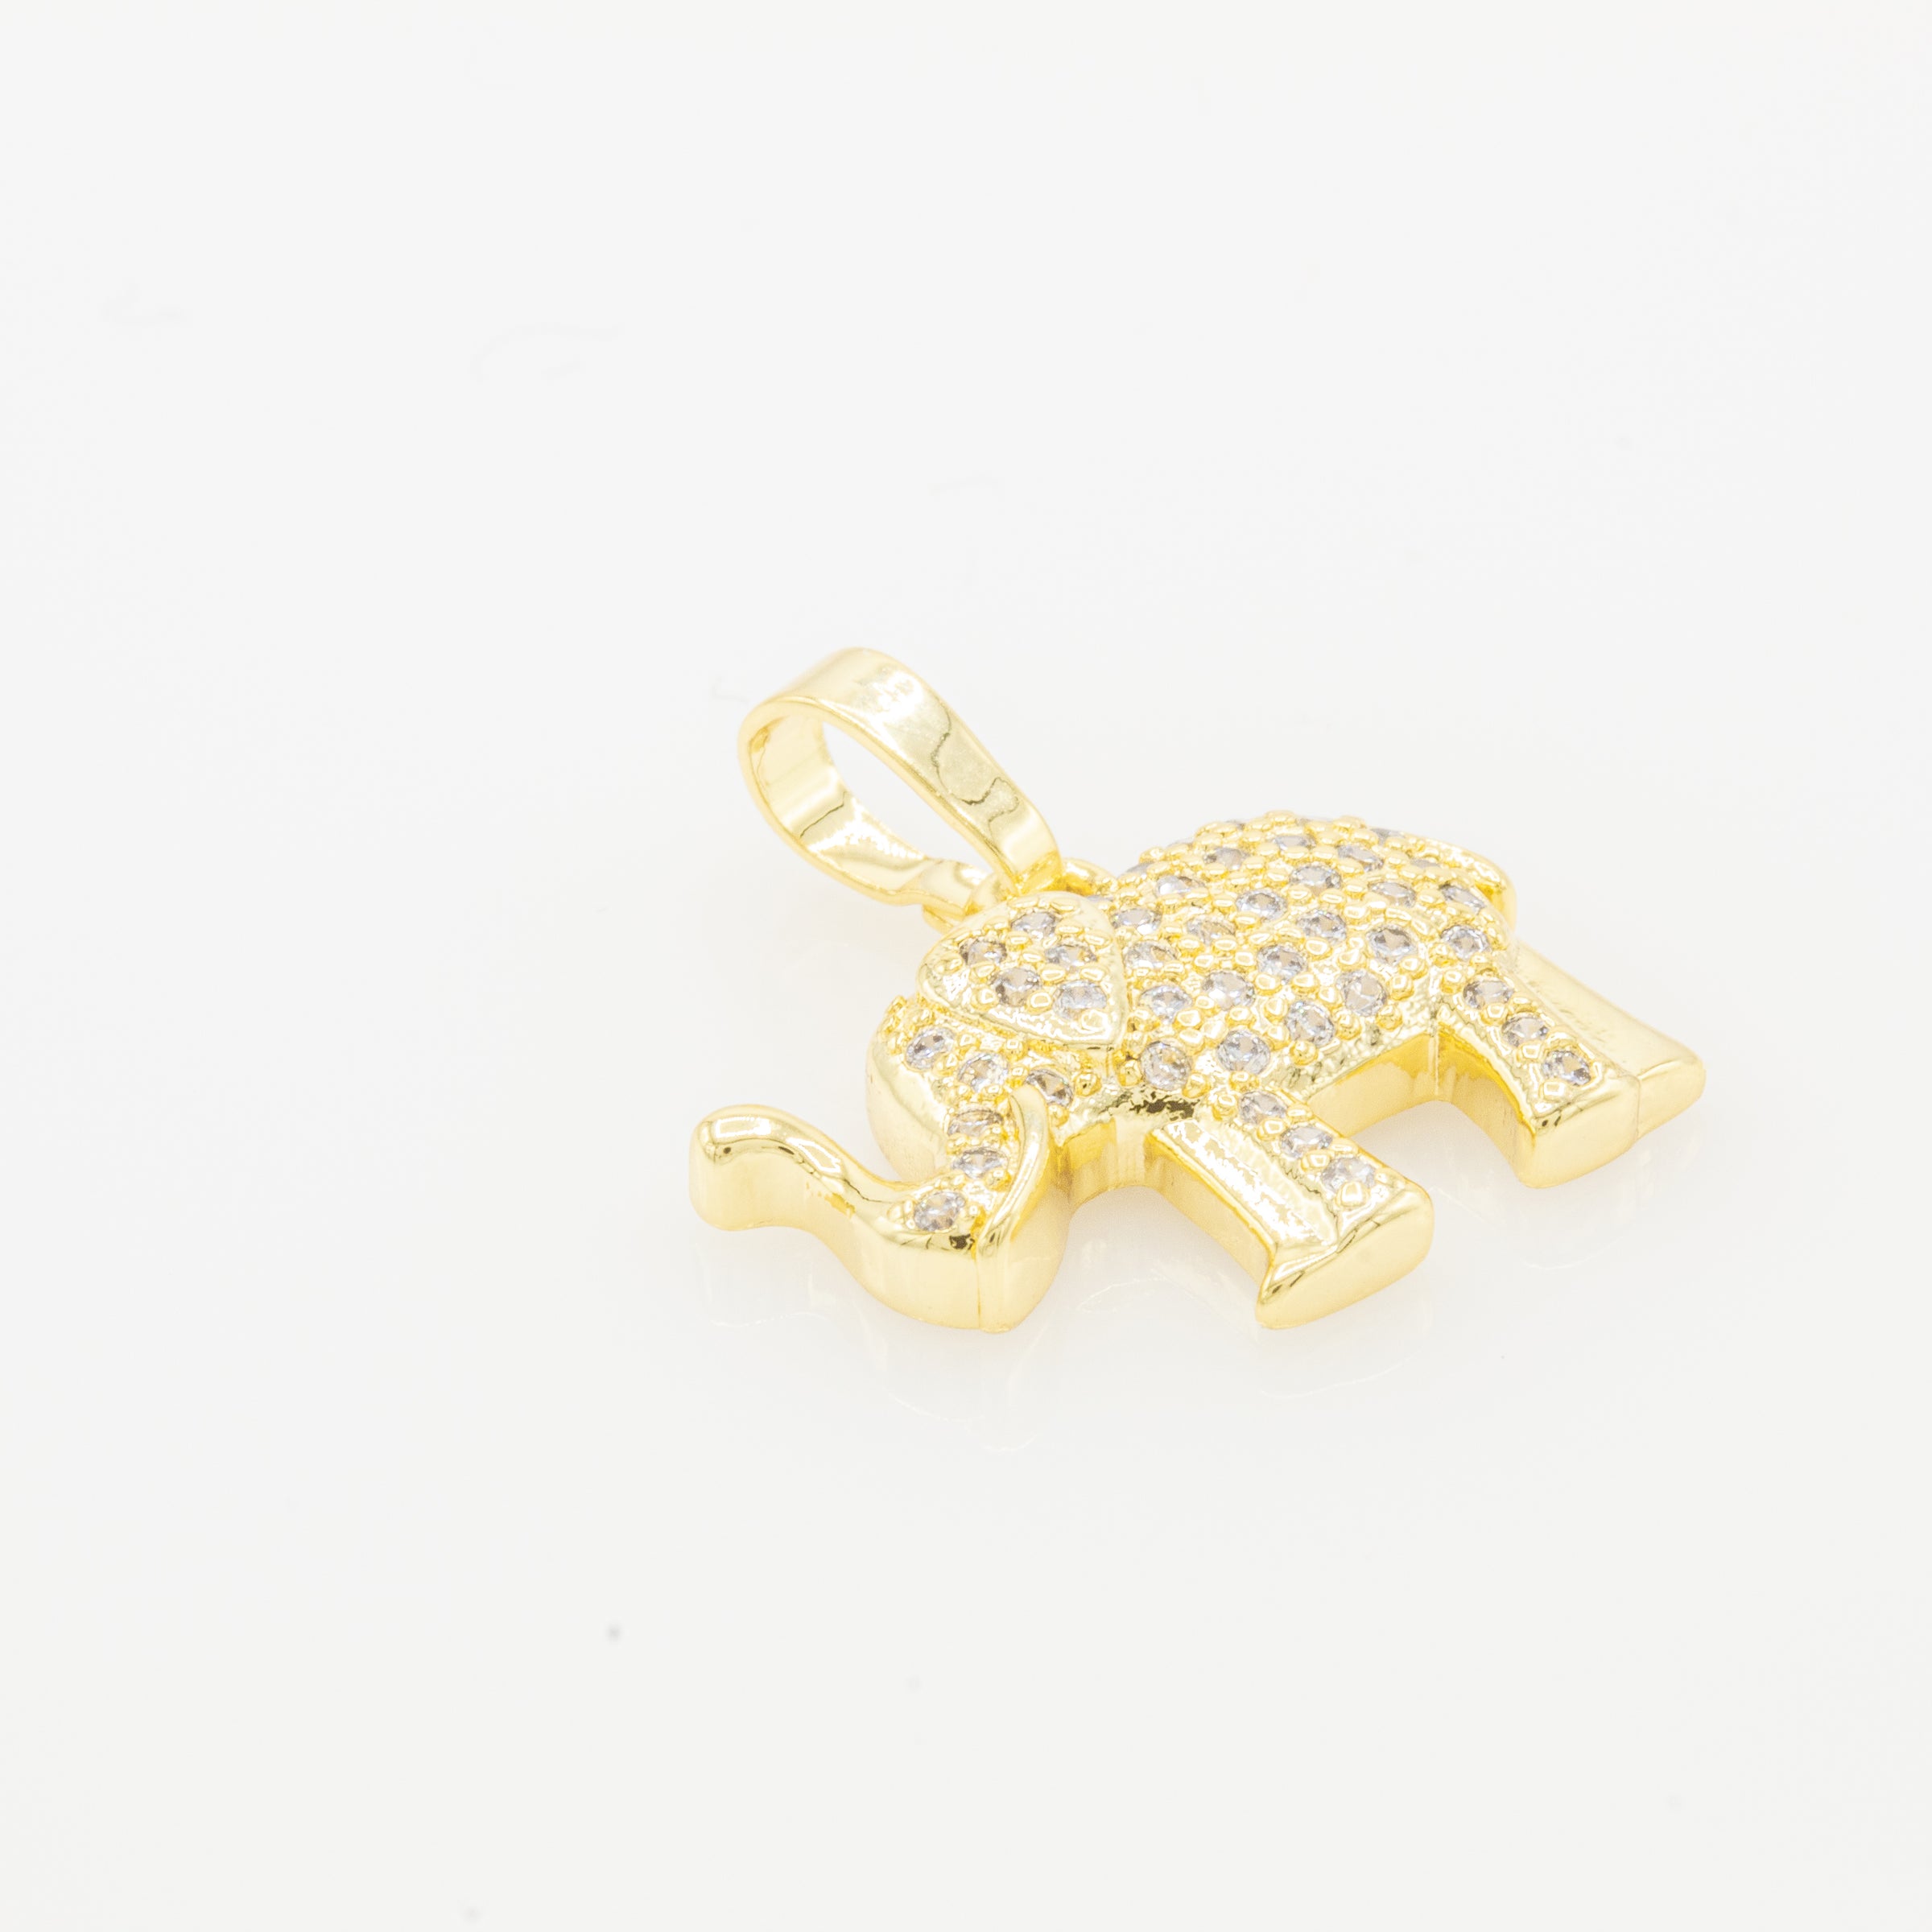 Elephant Cubic Zirconia Pendant 14K Gold Filled Women Fashion Jewelry